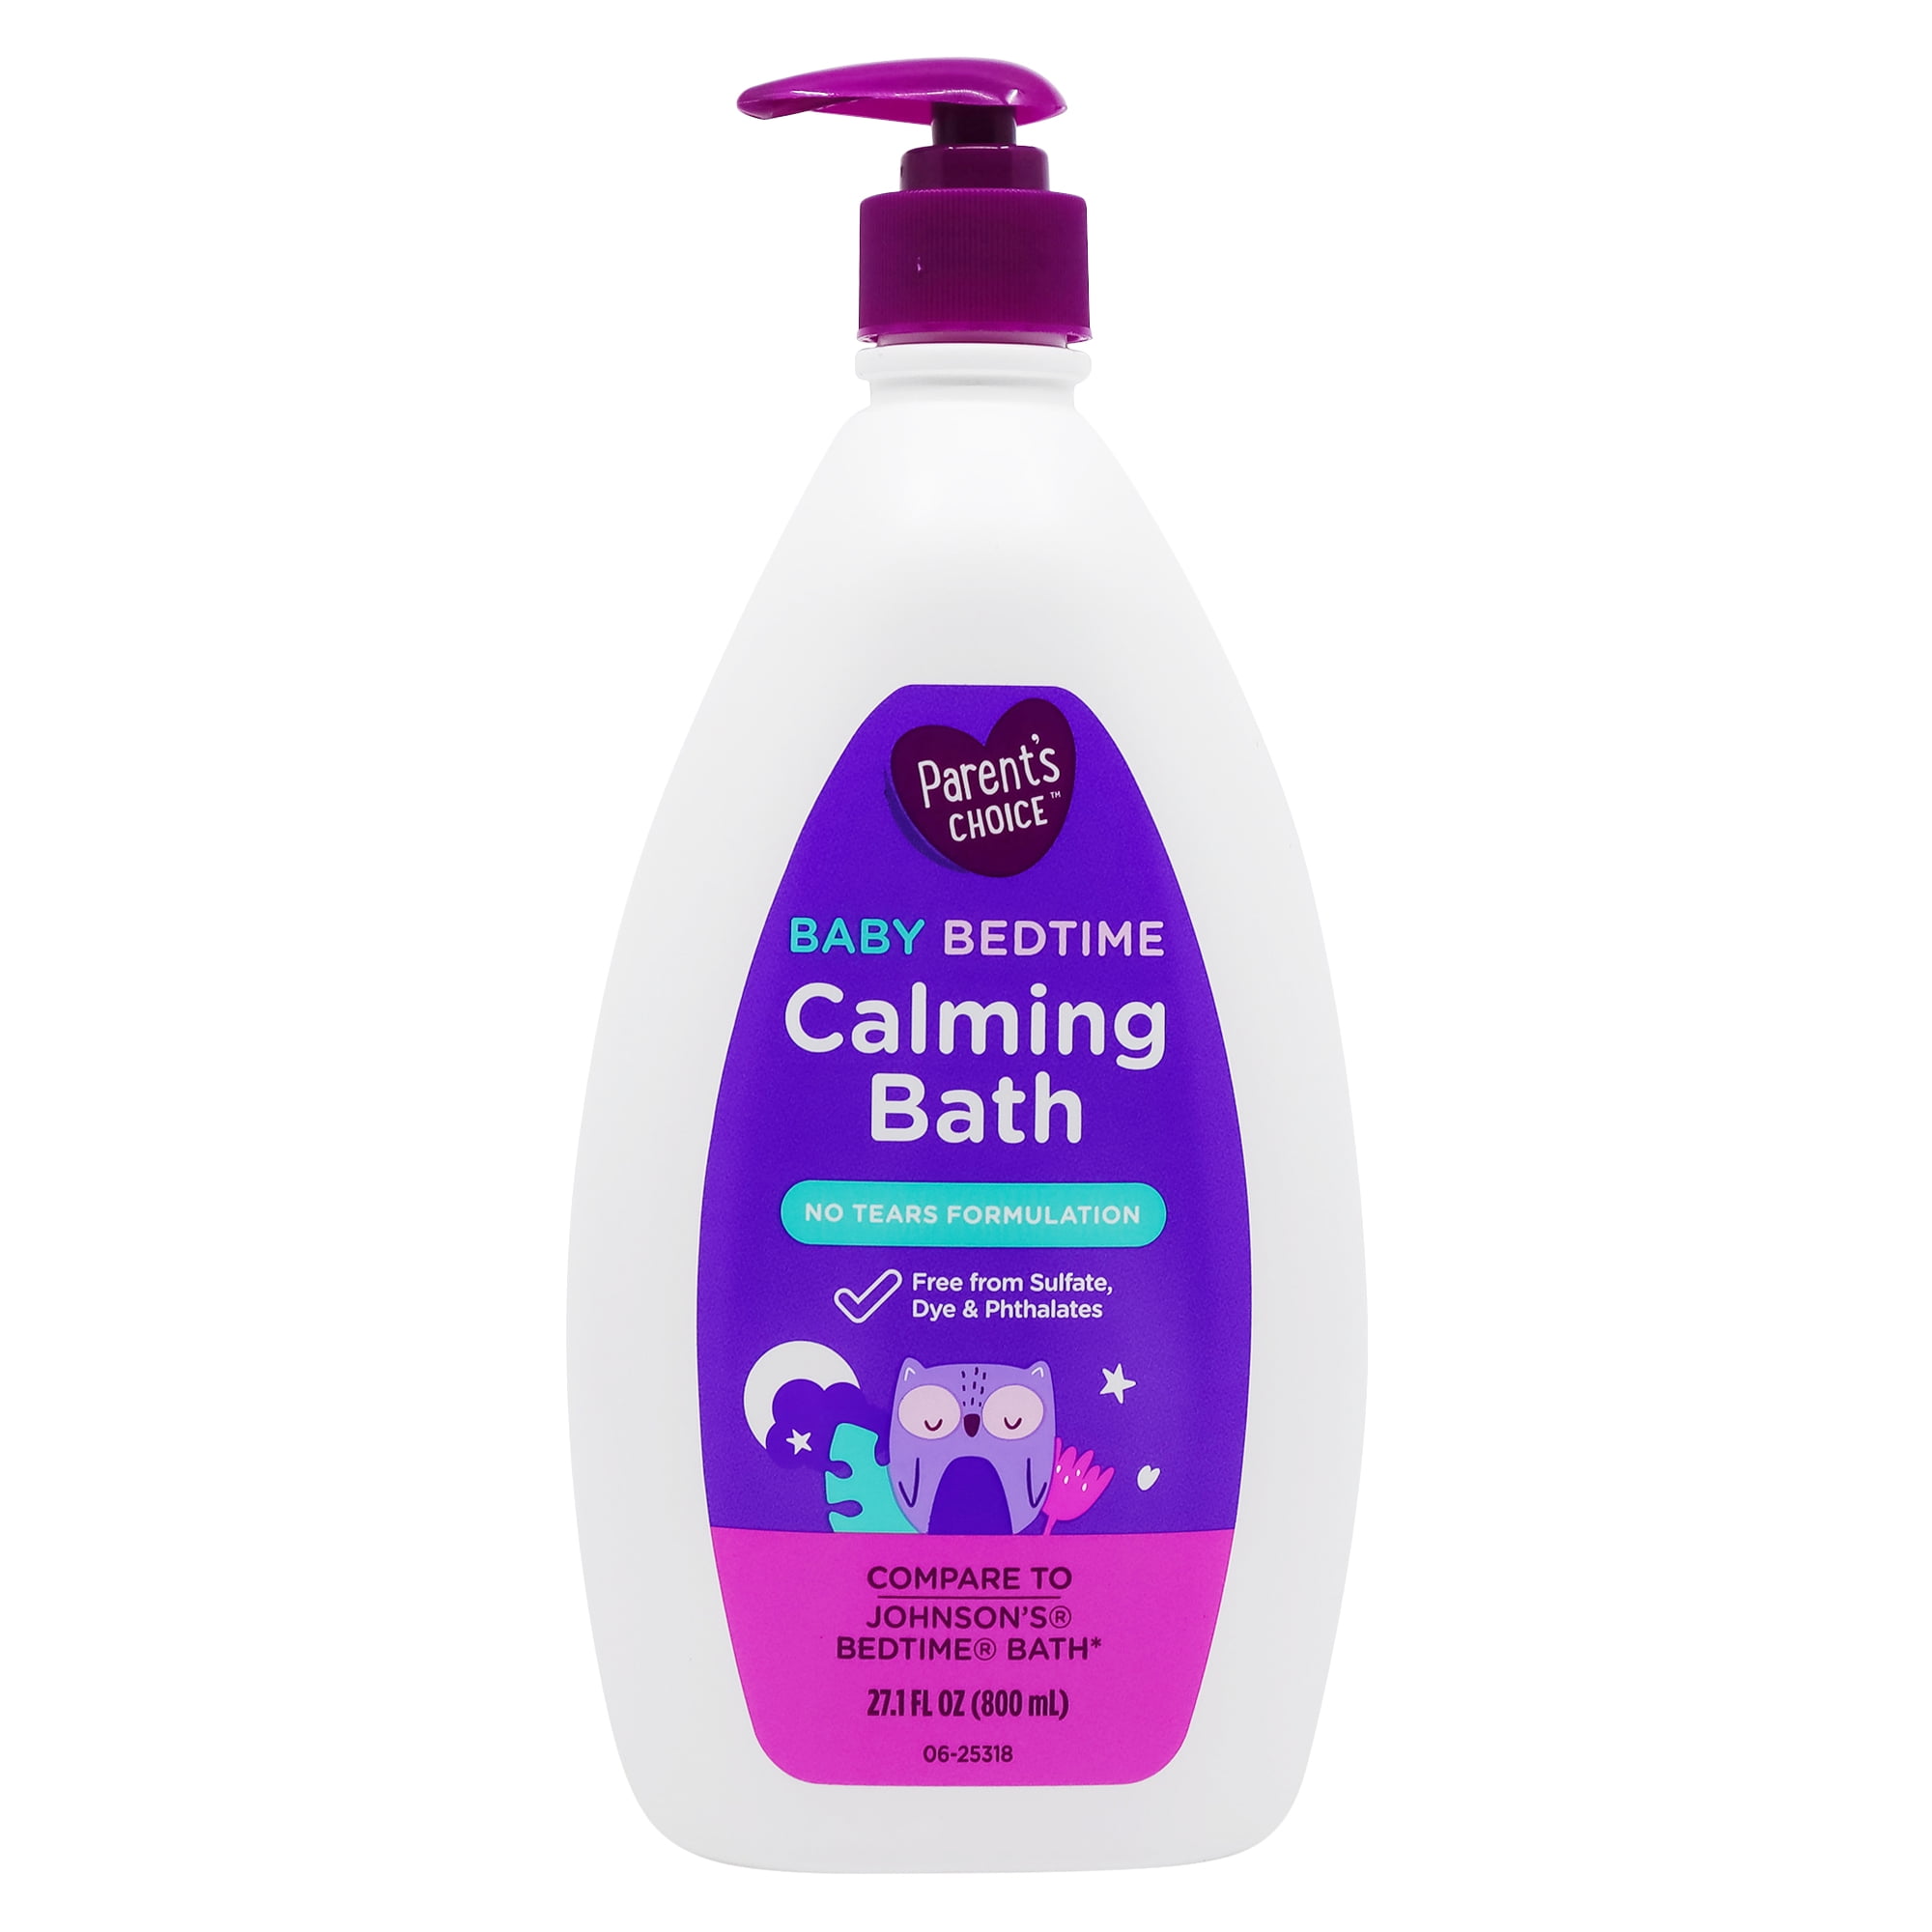 Parent's Choice Baby Bedtime Calming Bath, 27.1 oz